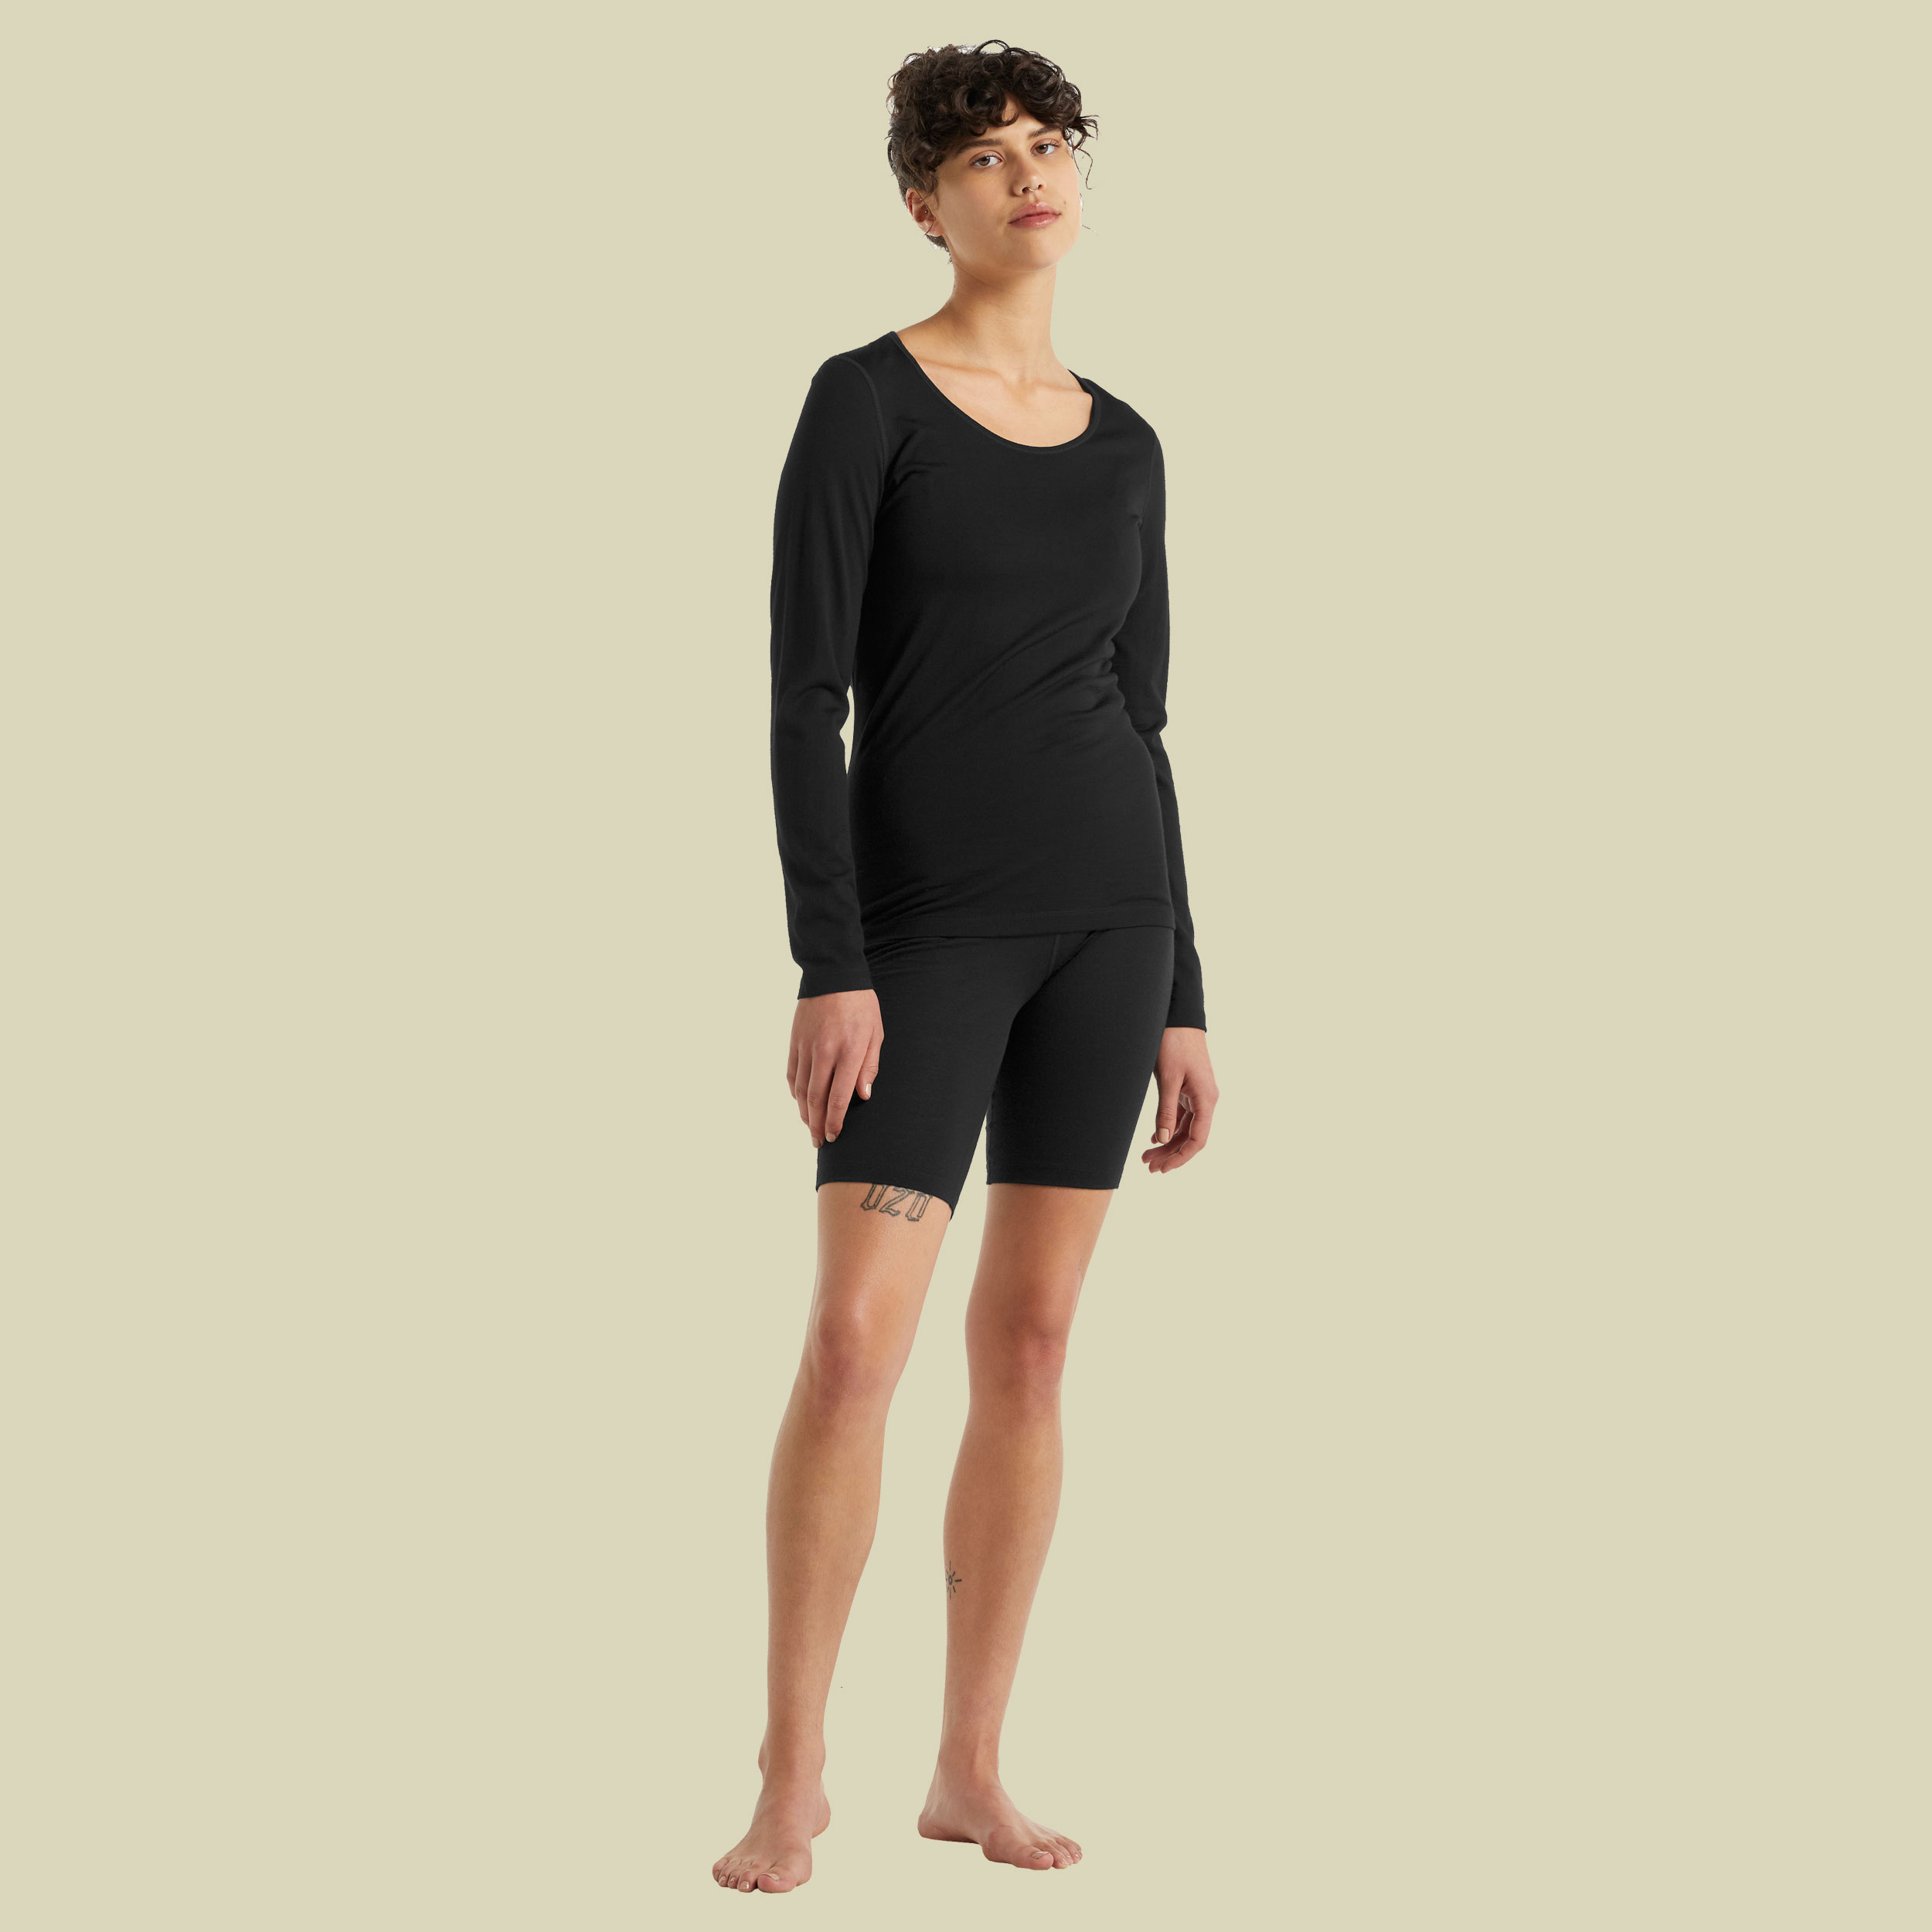 200 Oasis Shorts Women Größe XS Farbe black